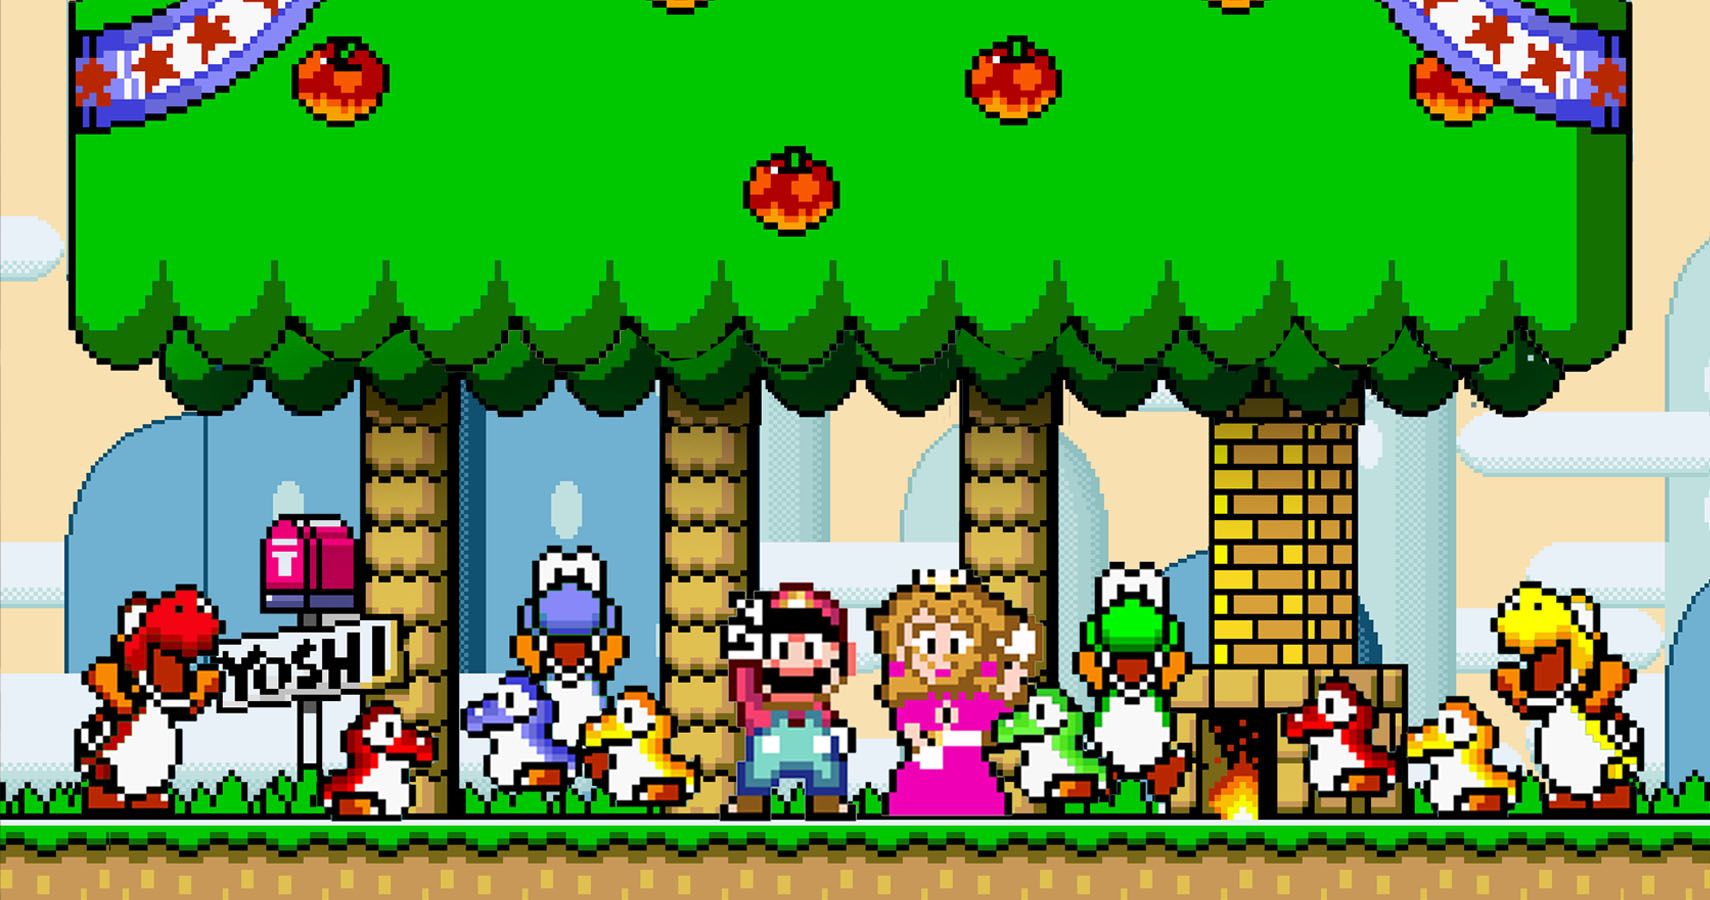 Super Mario World characters